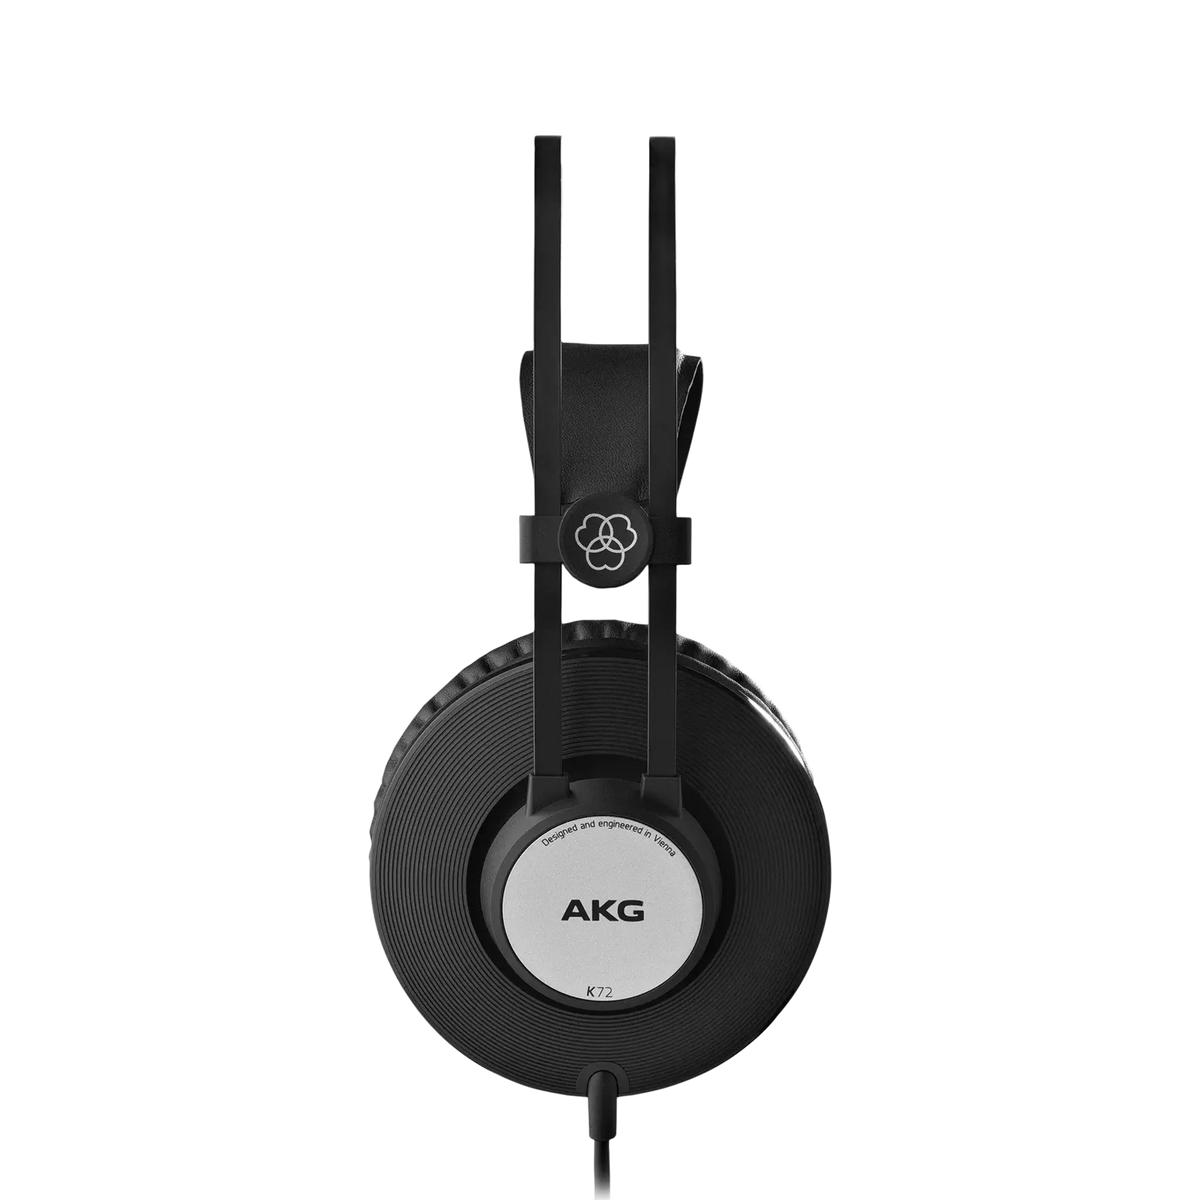 AKG K72 MKII Studio Headphones